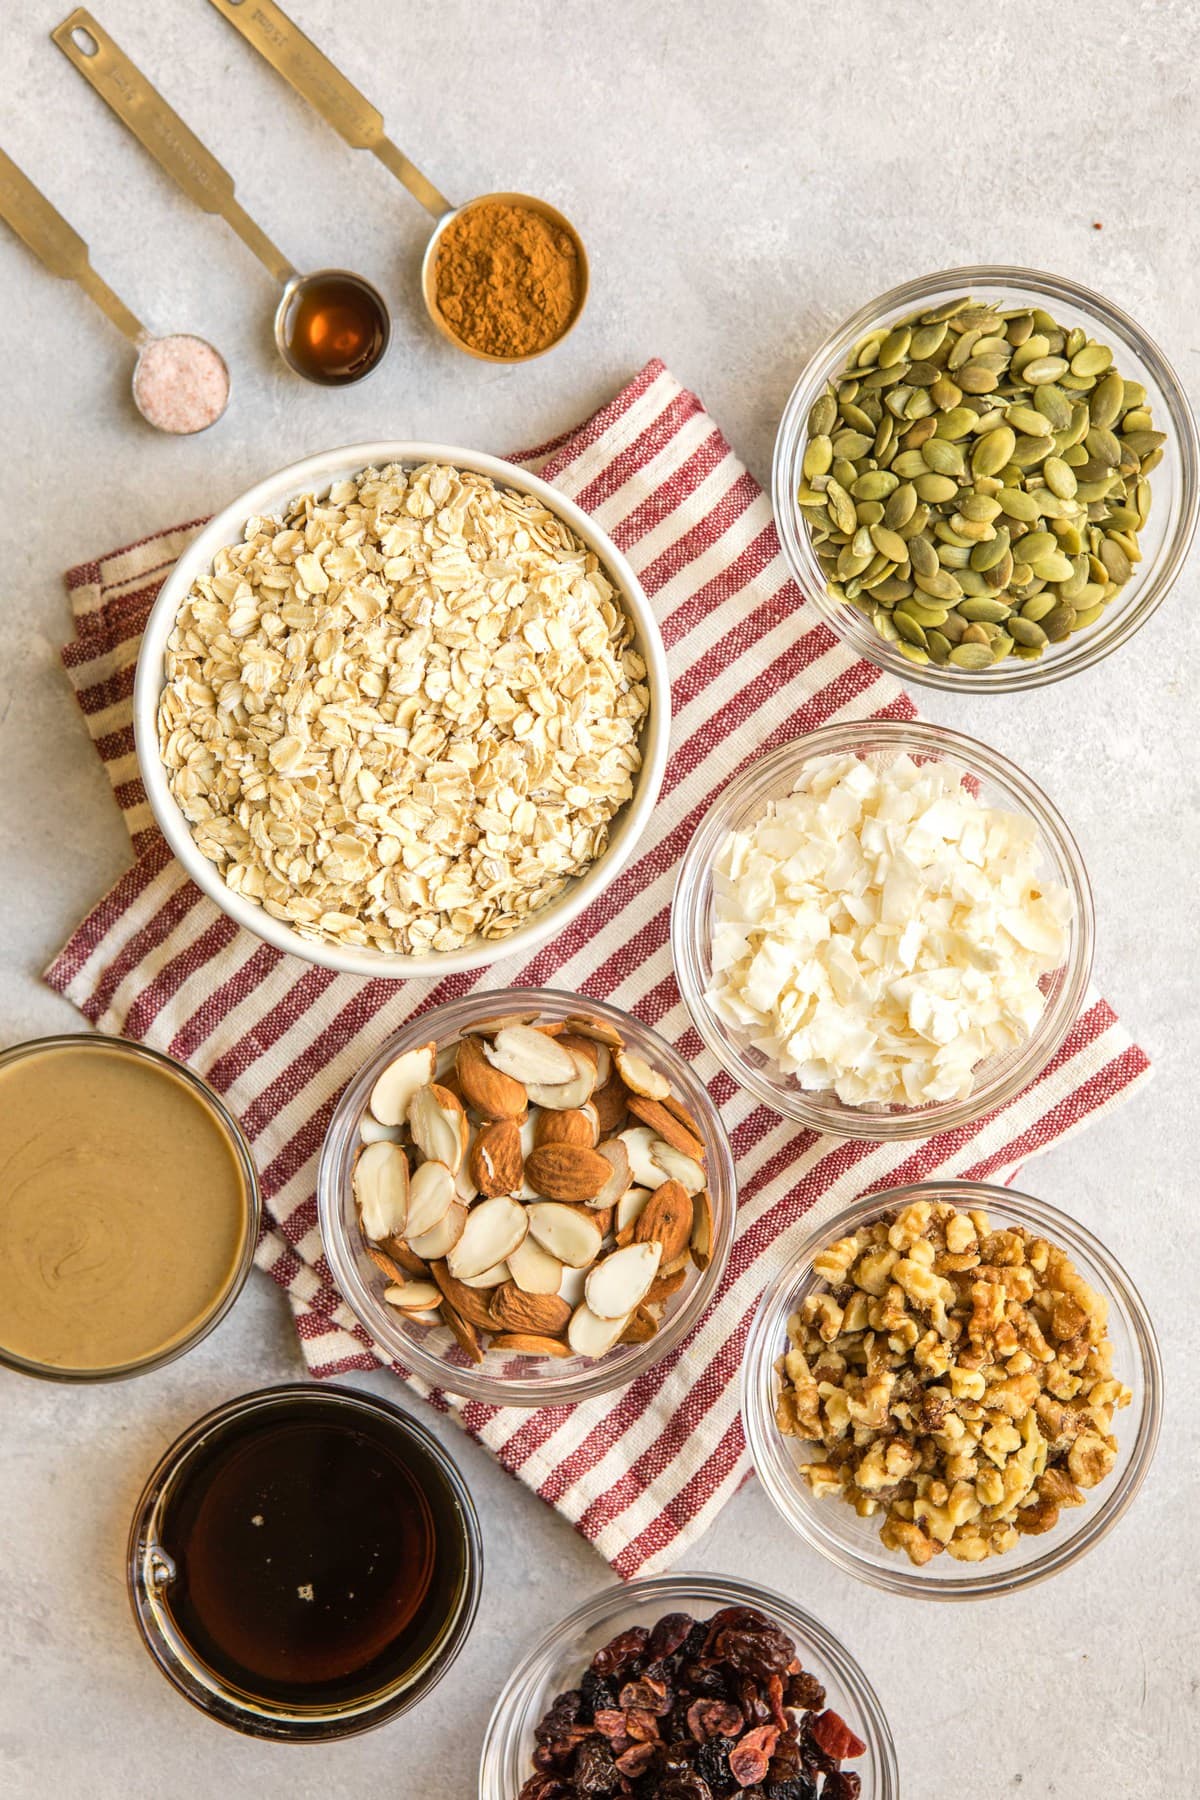 Easy Vegan Granola Recipe (9 Ingredients!) - From My Bowl